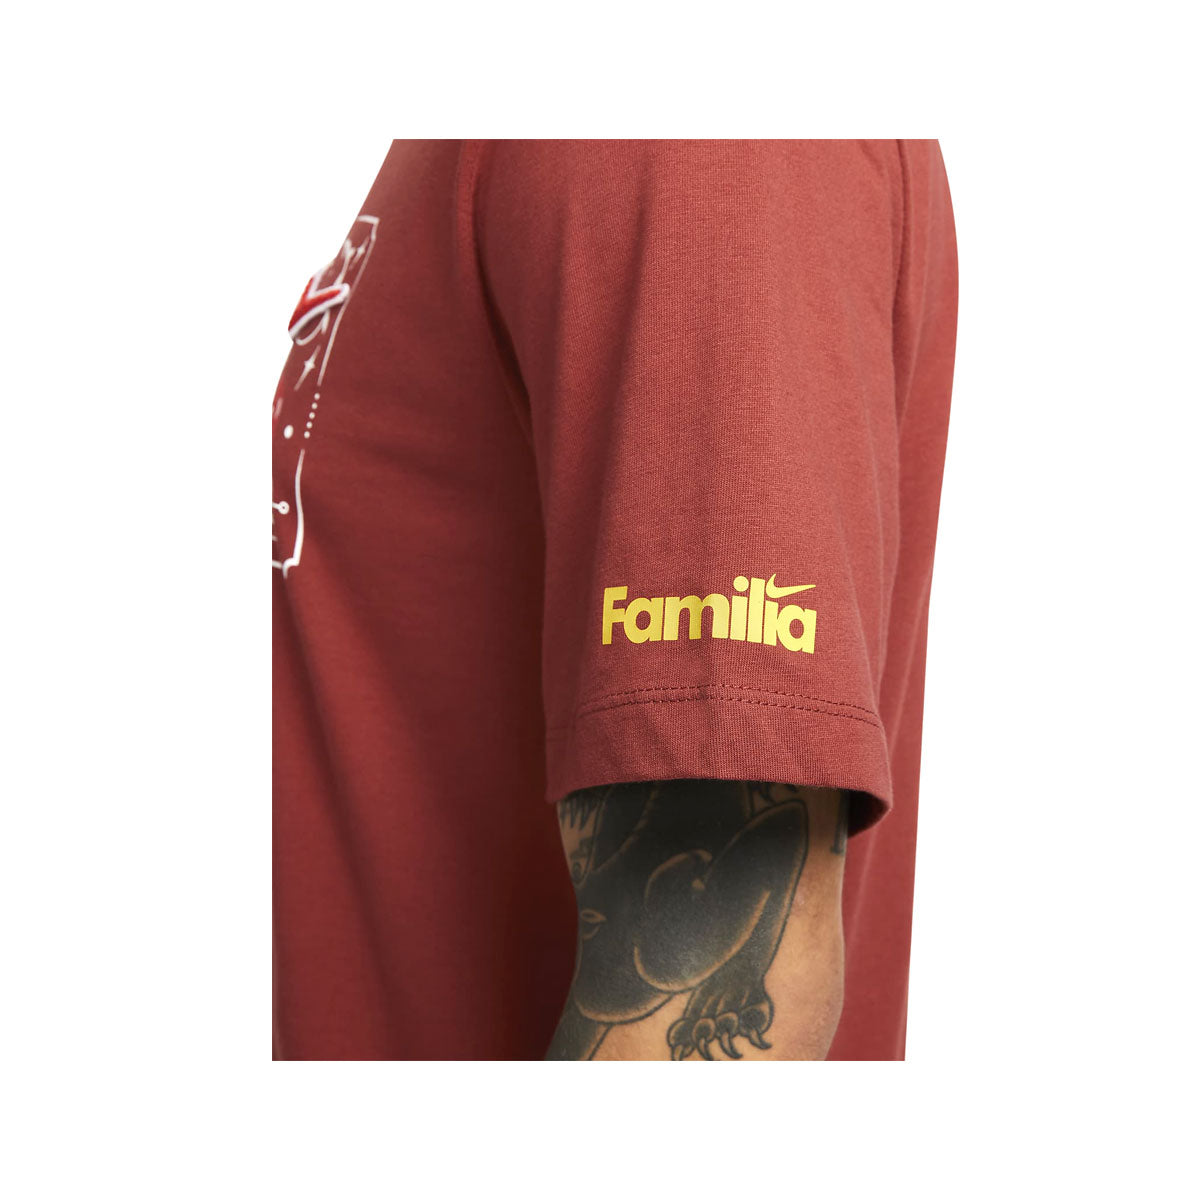 Nike Men's Sportswear Somos Familia Short-Sleeve T-Shirt